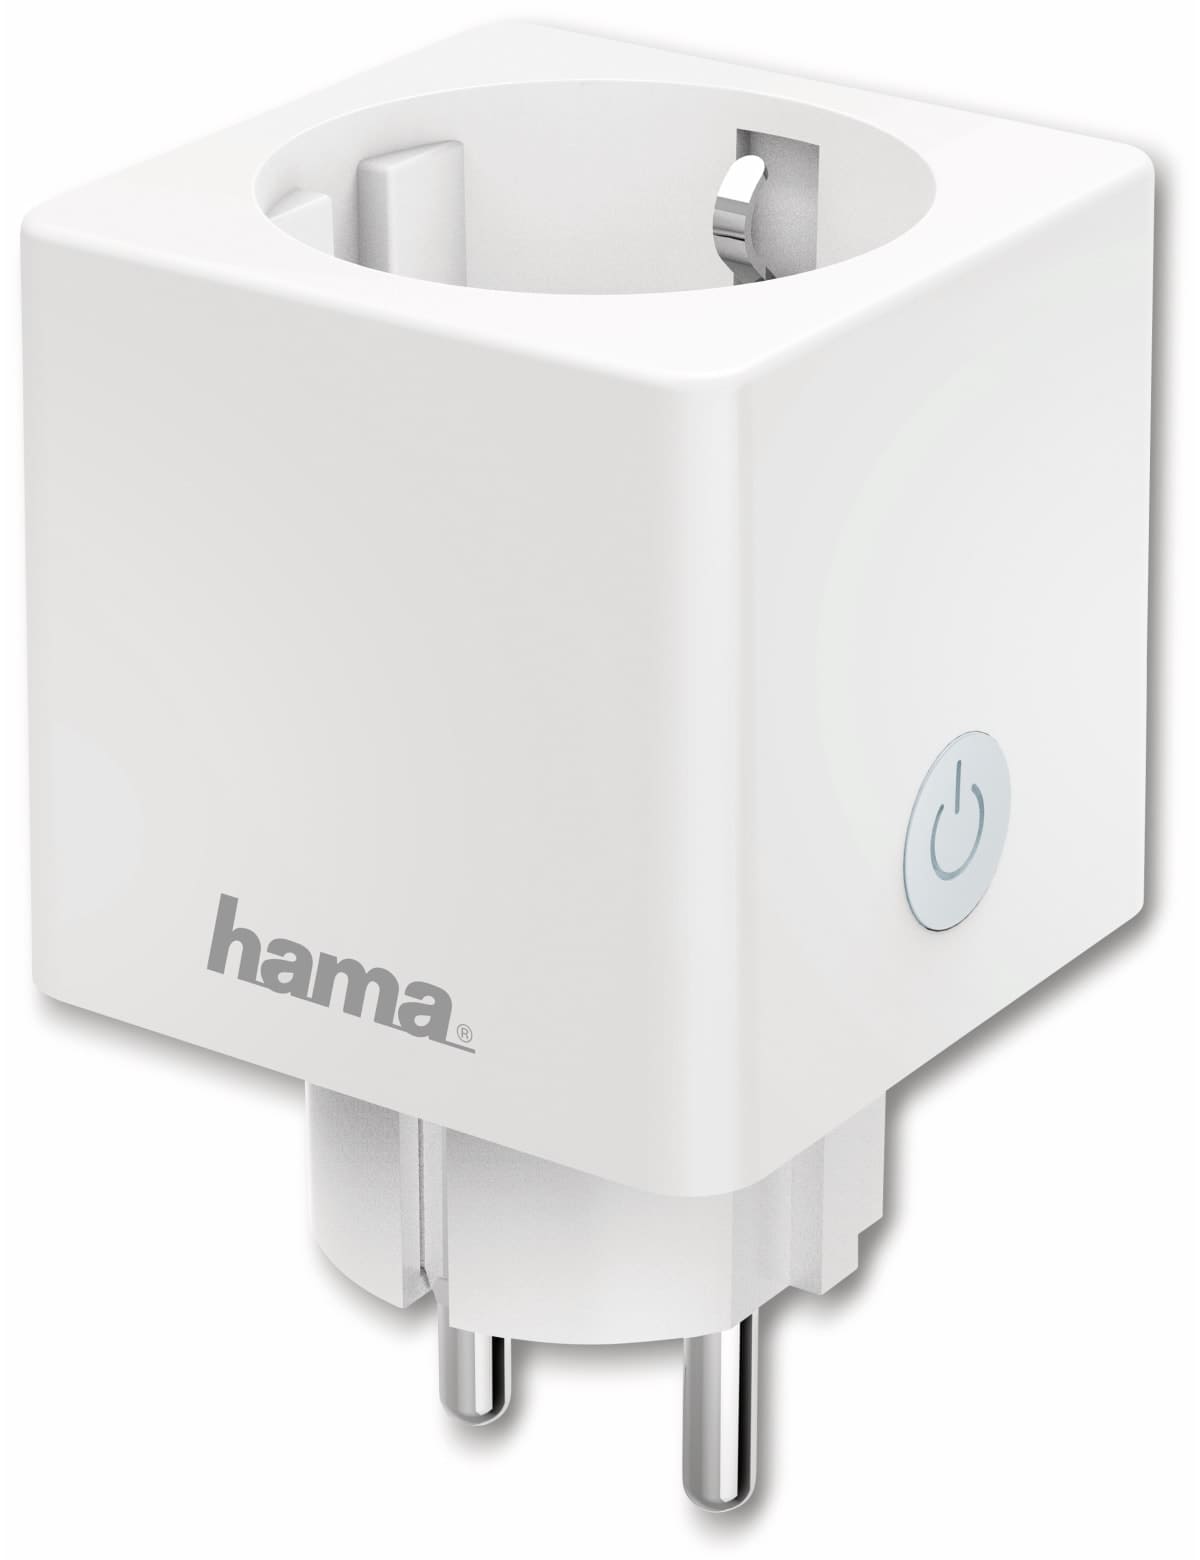 HAMA WLAN-Steckdose Mini, 3680 W, 16 A von Hama